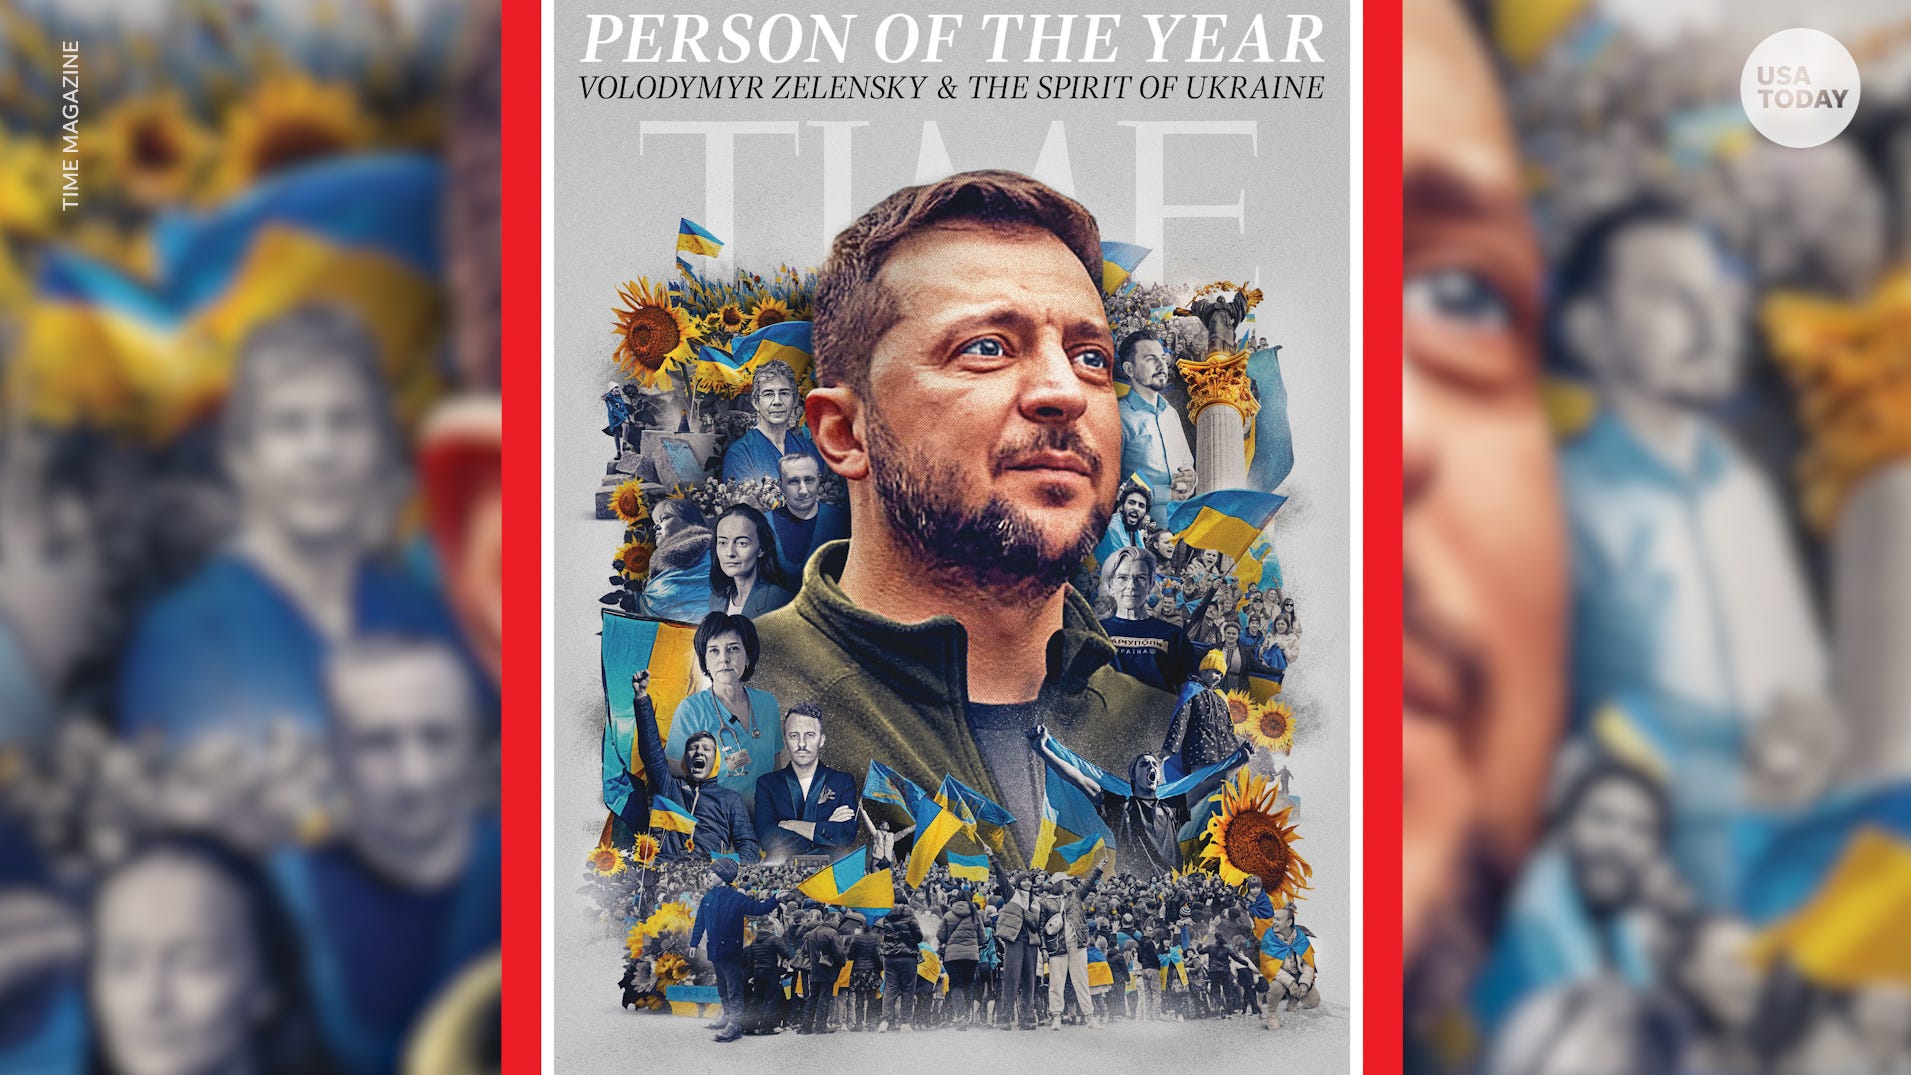 Time magazine has chosen Ukrainian president Volodymyr Zelenskyy as the 2022 "Person of the Year."